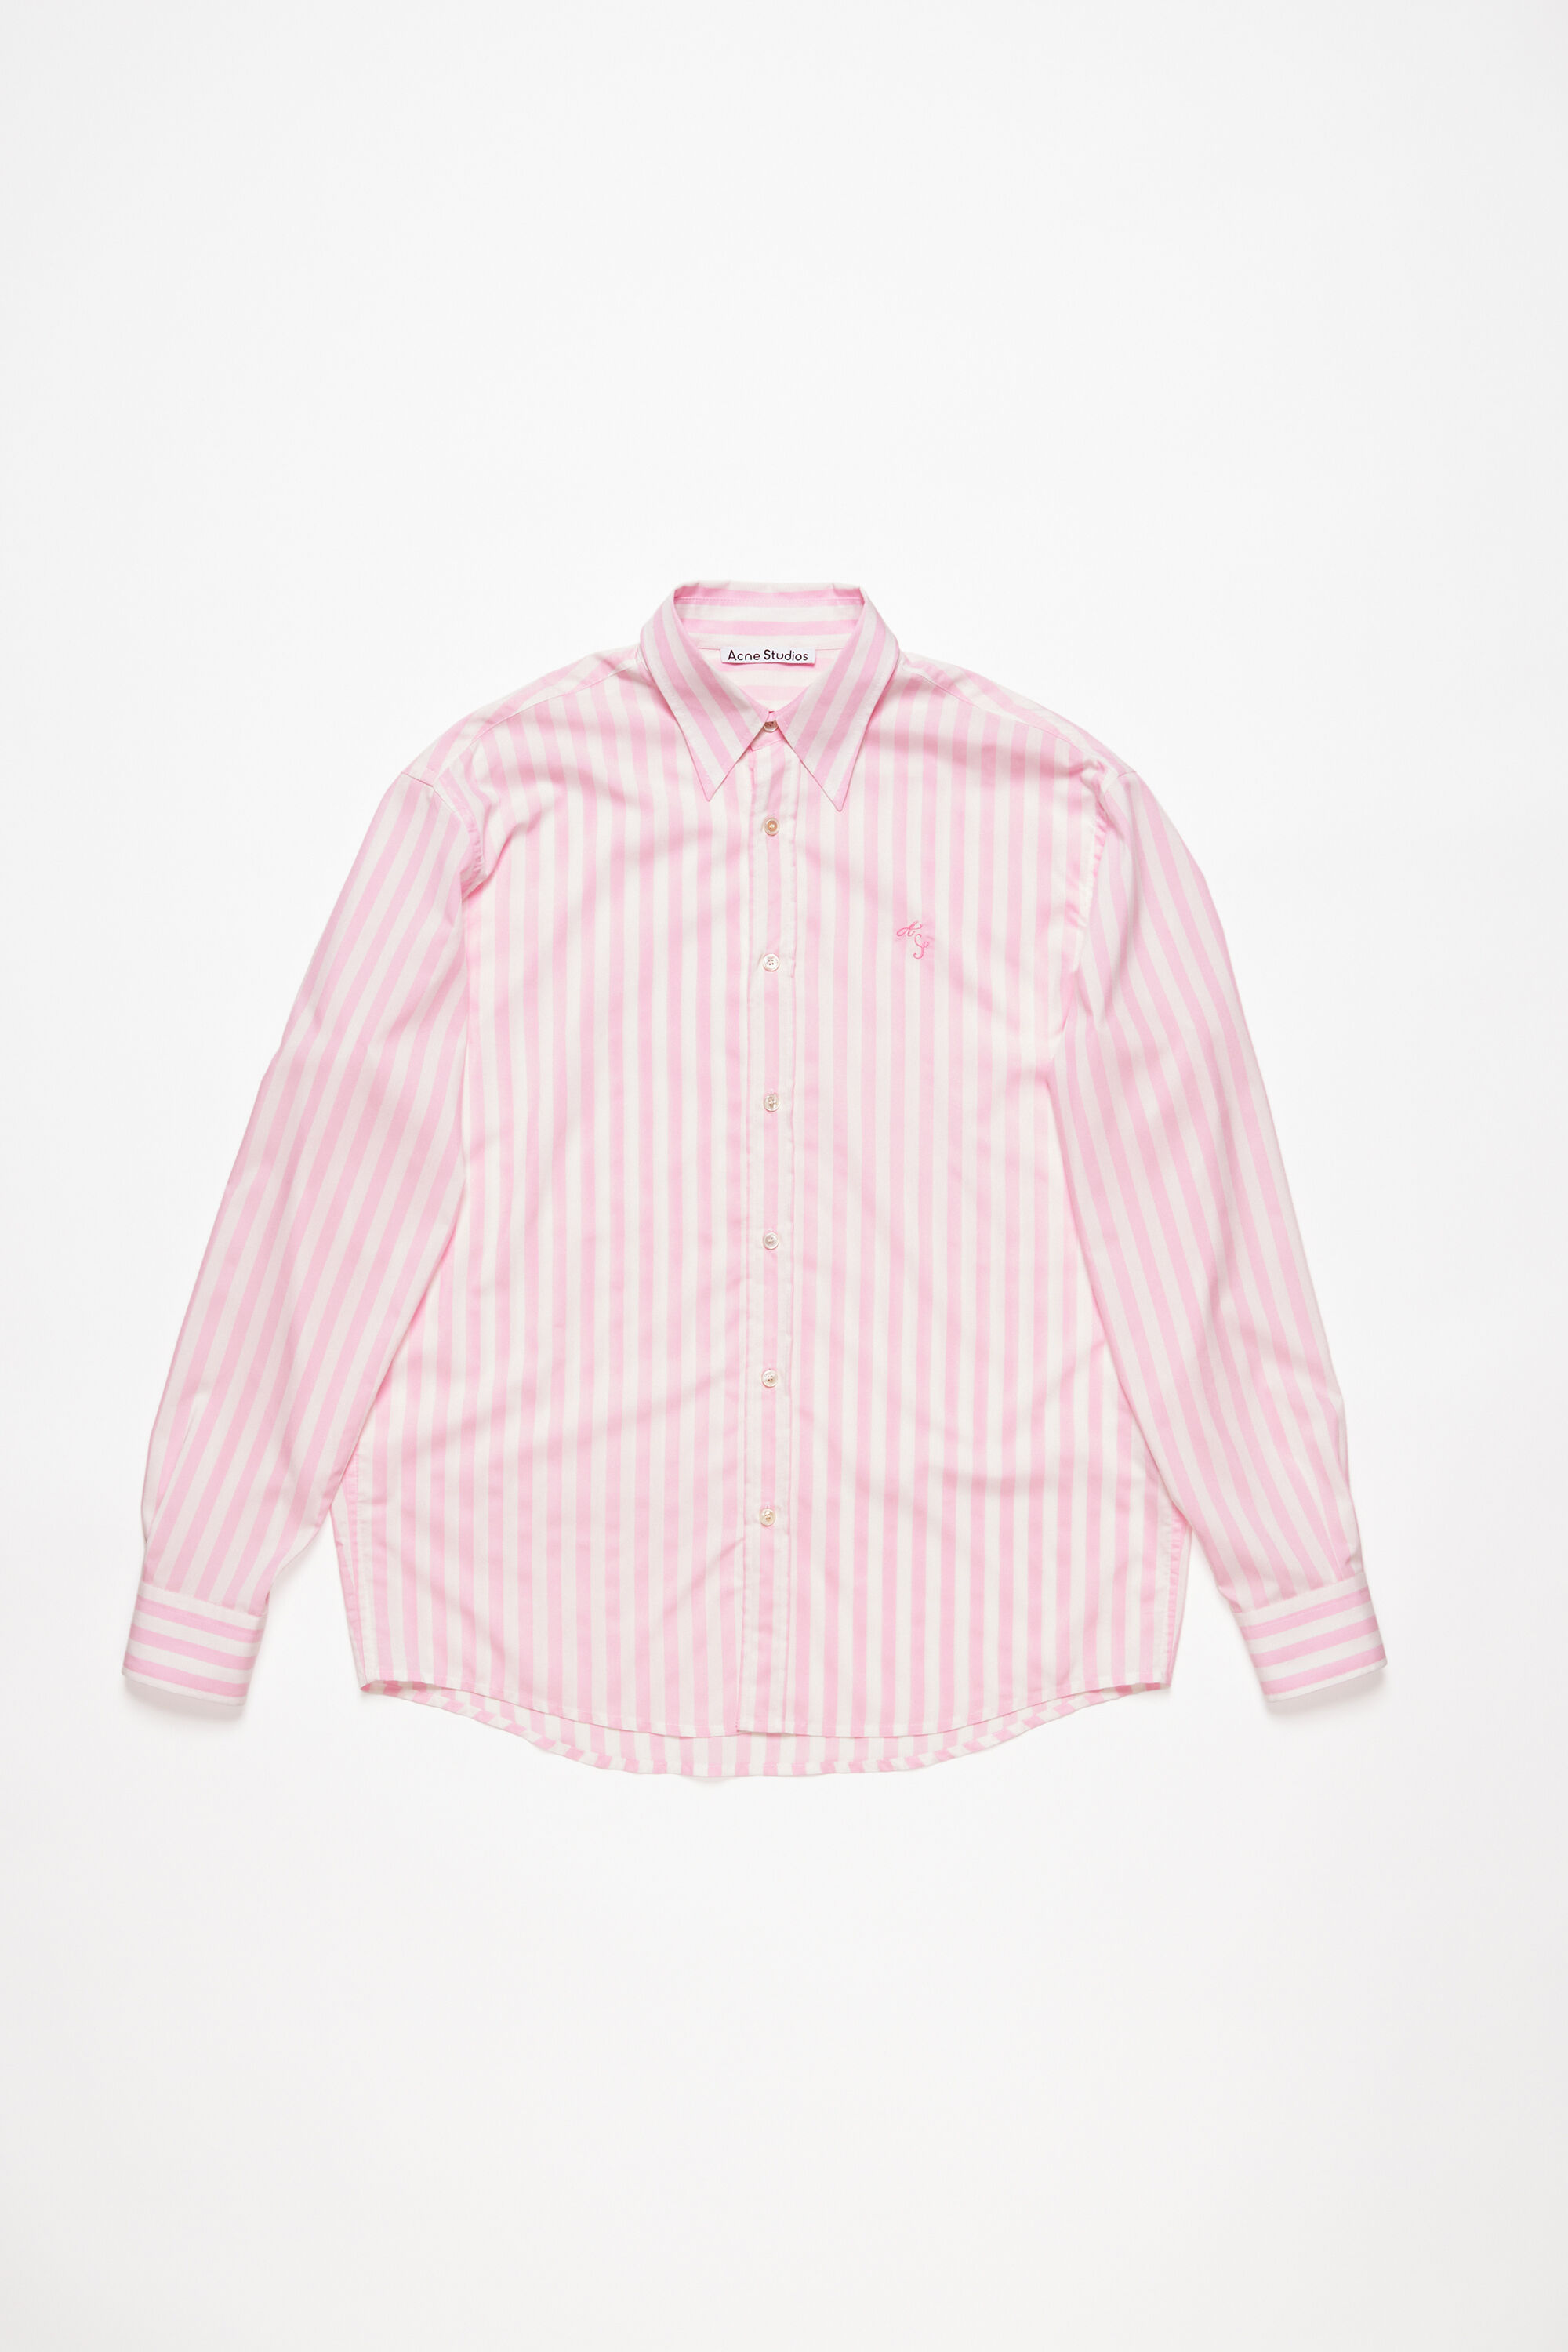 Acne Studios - ストライプボタンアップシャツ - ピンク/ホワイト